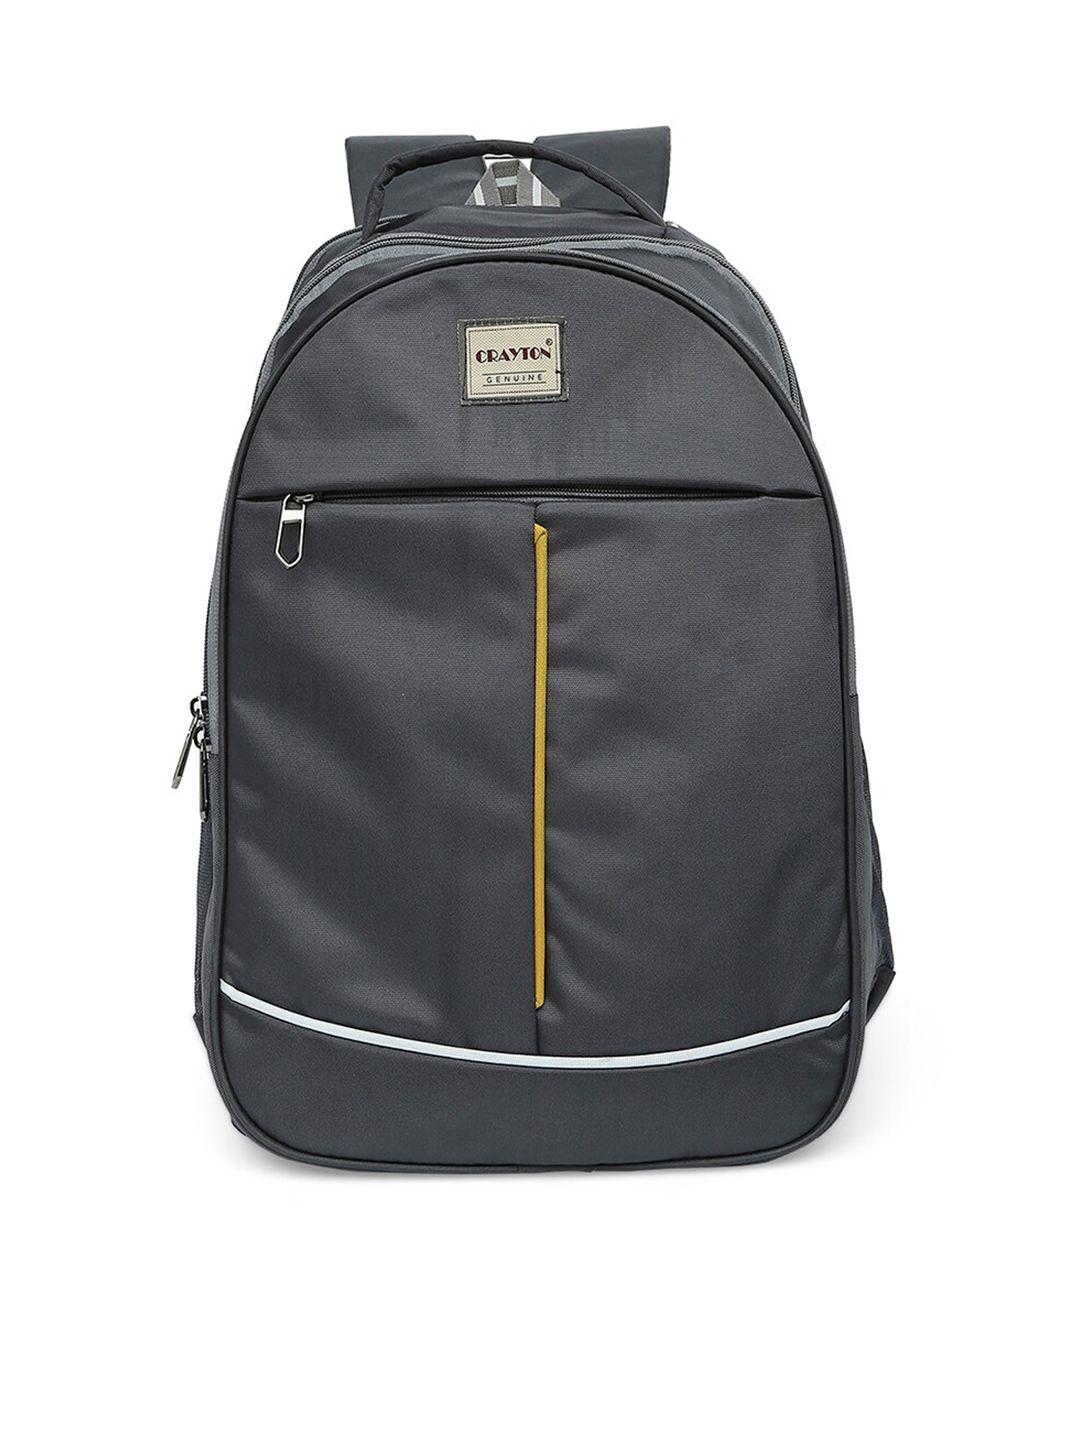 crayton unisex ergonomic upto 15.6 inch backpack with compression straps